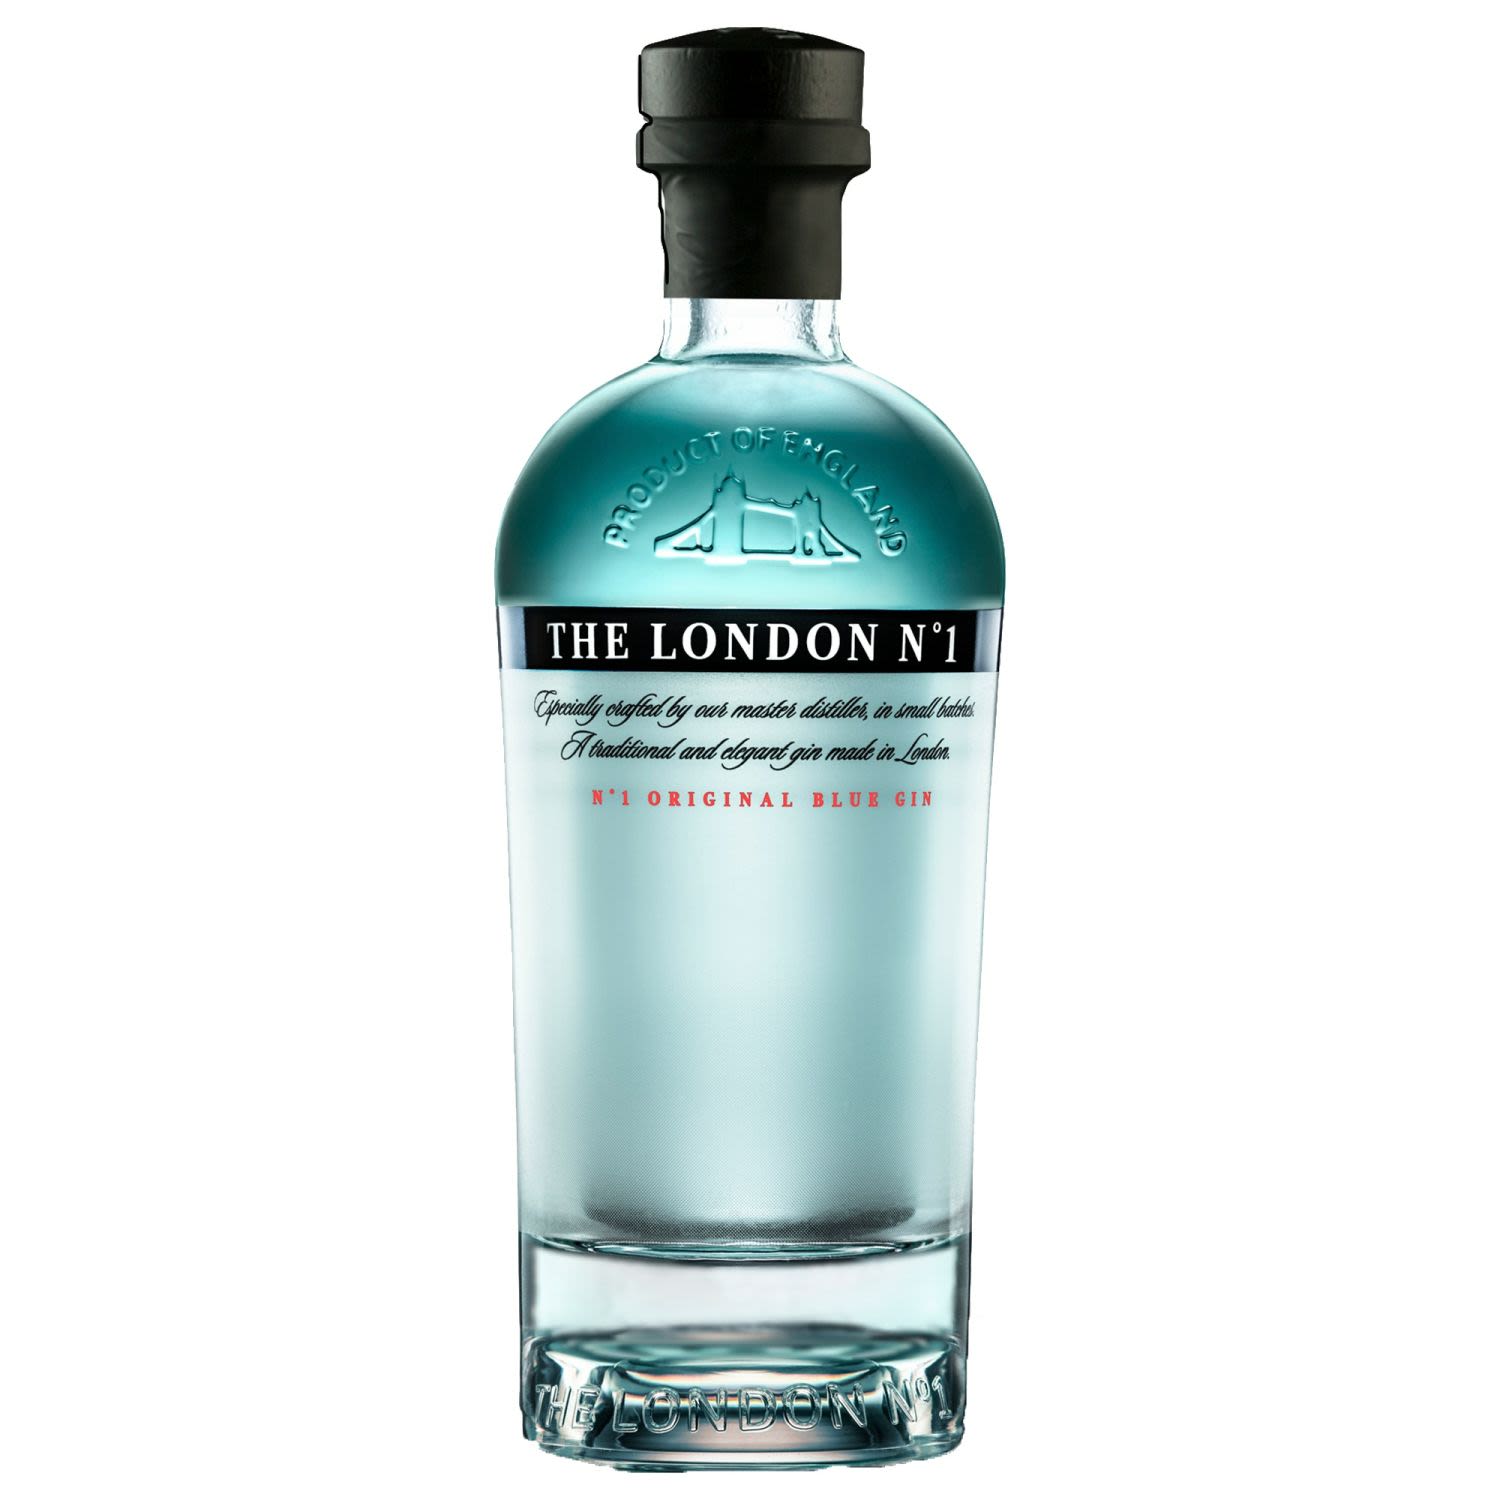 The London No. 1 Original Blue Gin 700mL Bottle